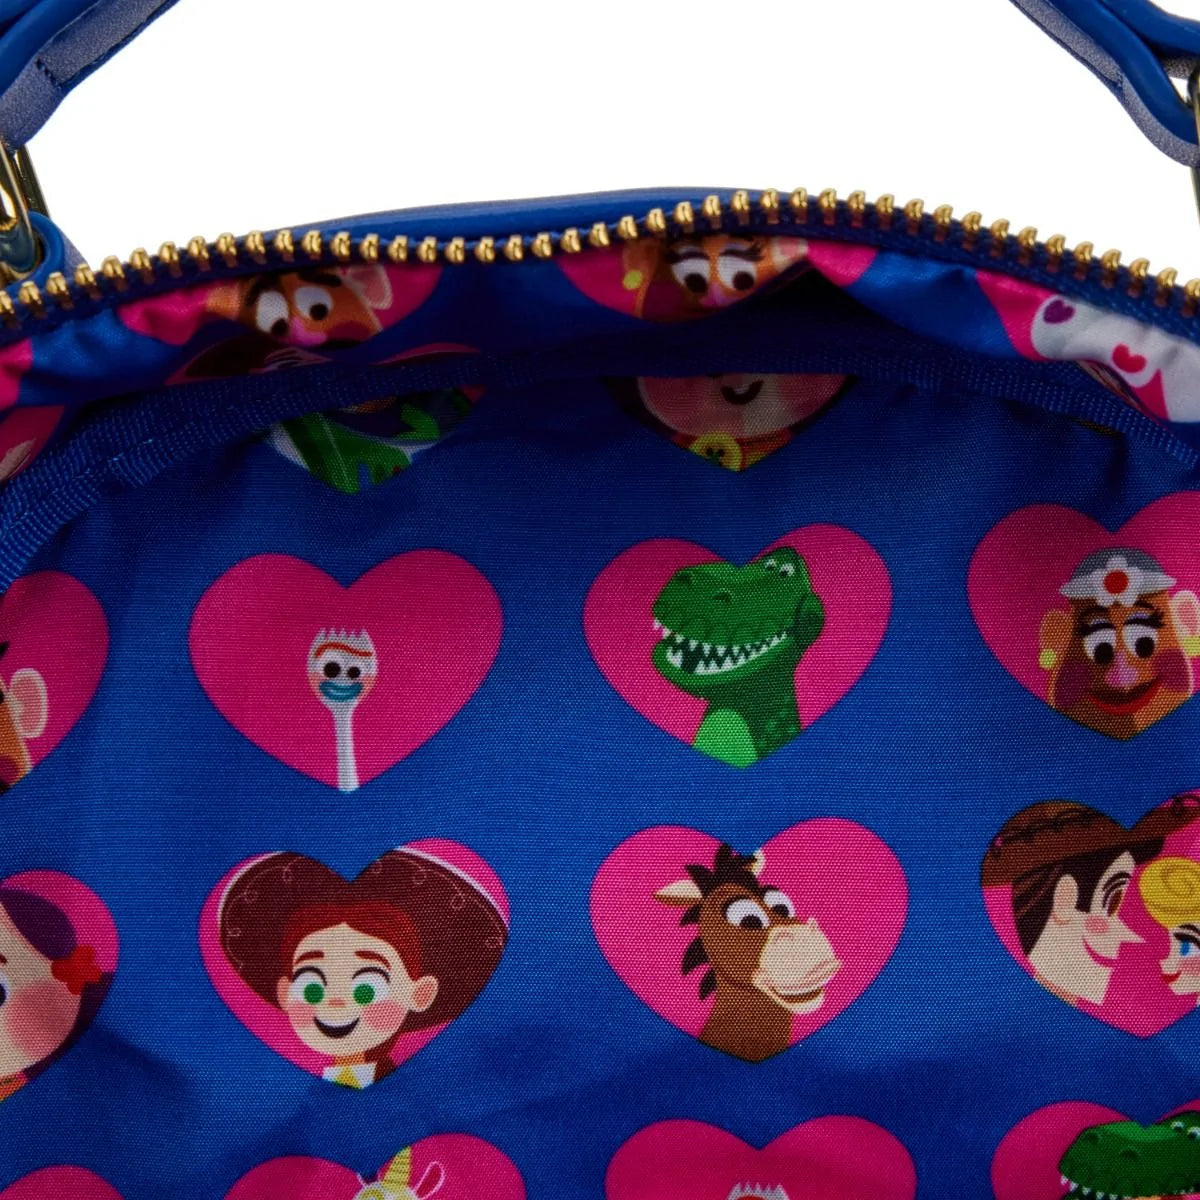 Woody and Bo Peep Pixar Moment Mini Backpack